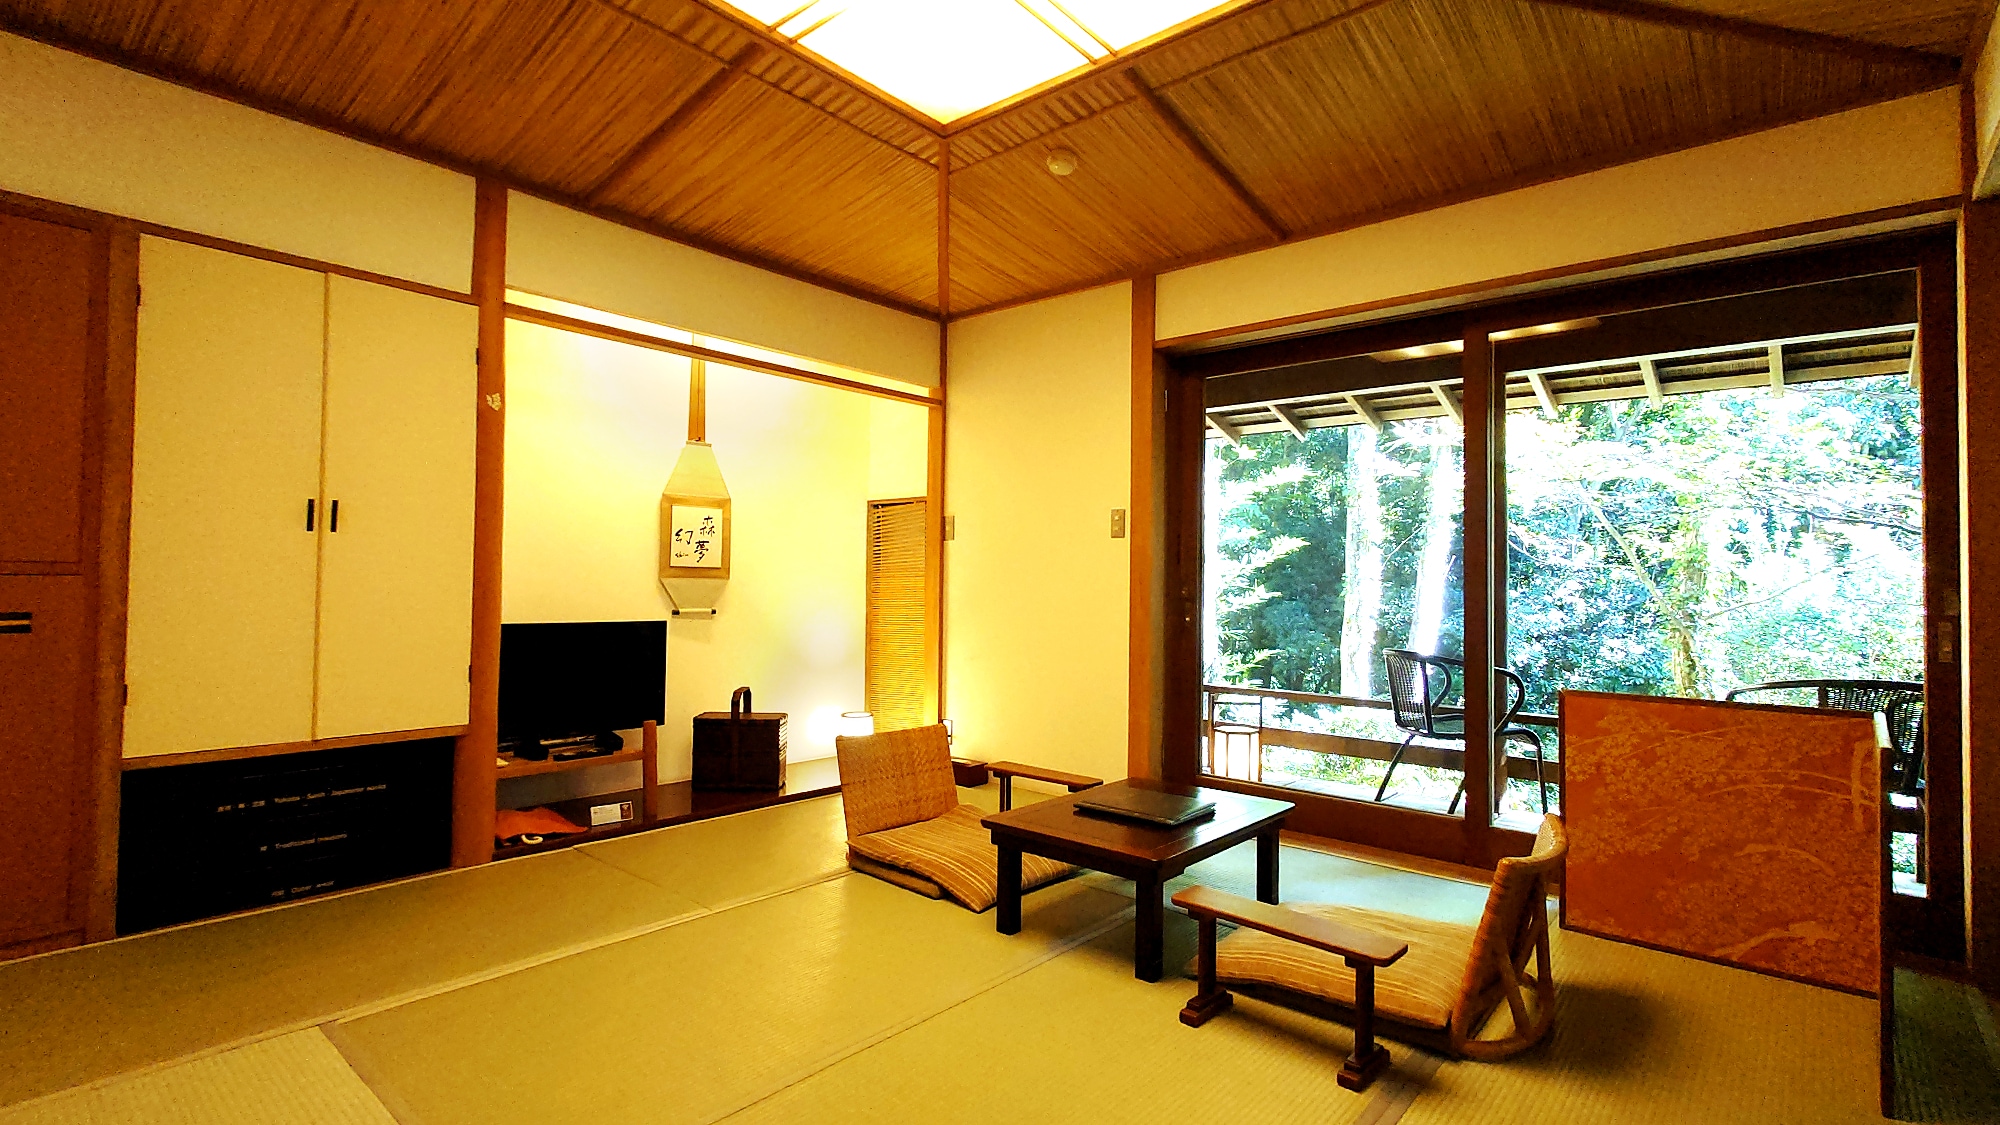 ◆ Small Japanese-style room A 501 "Saigyo"